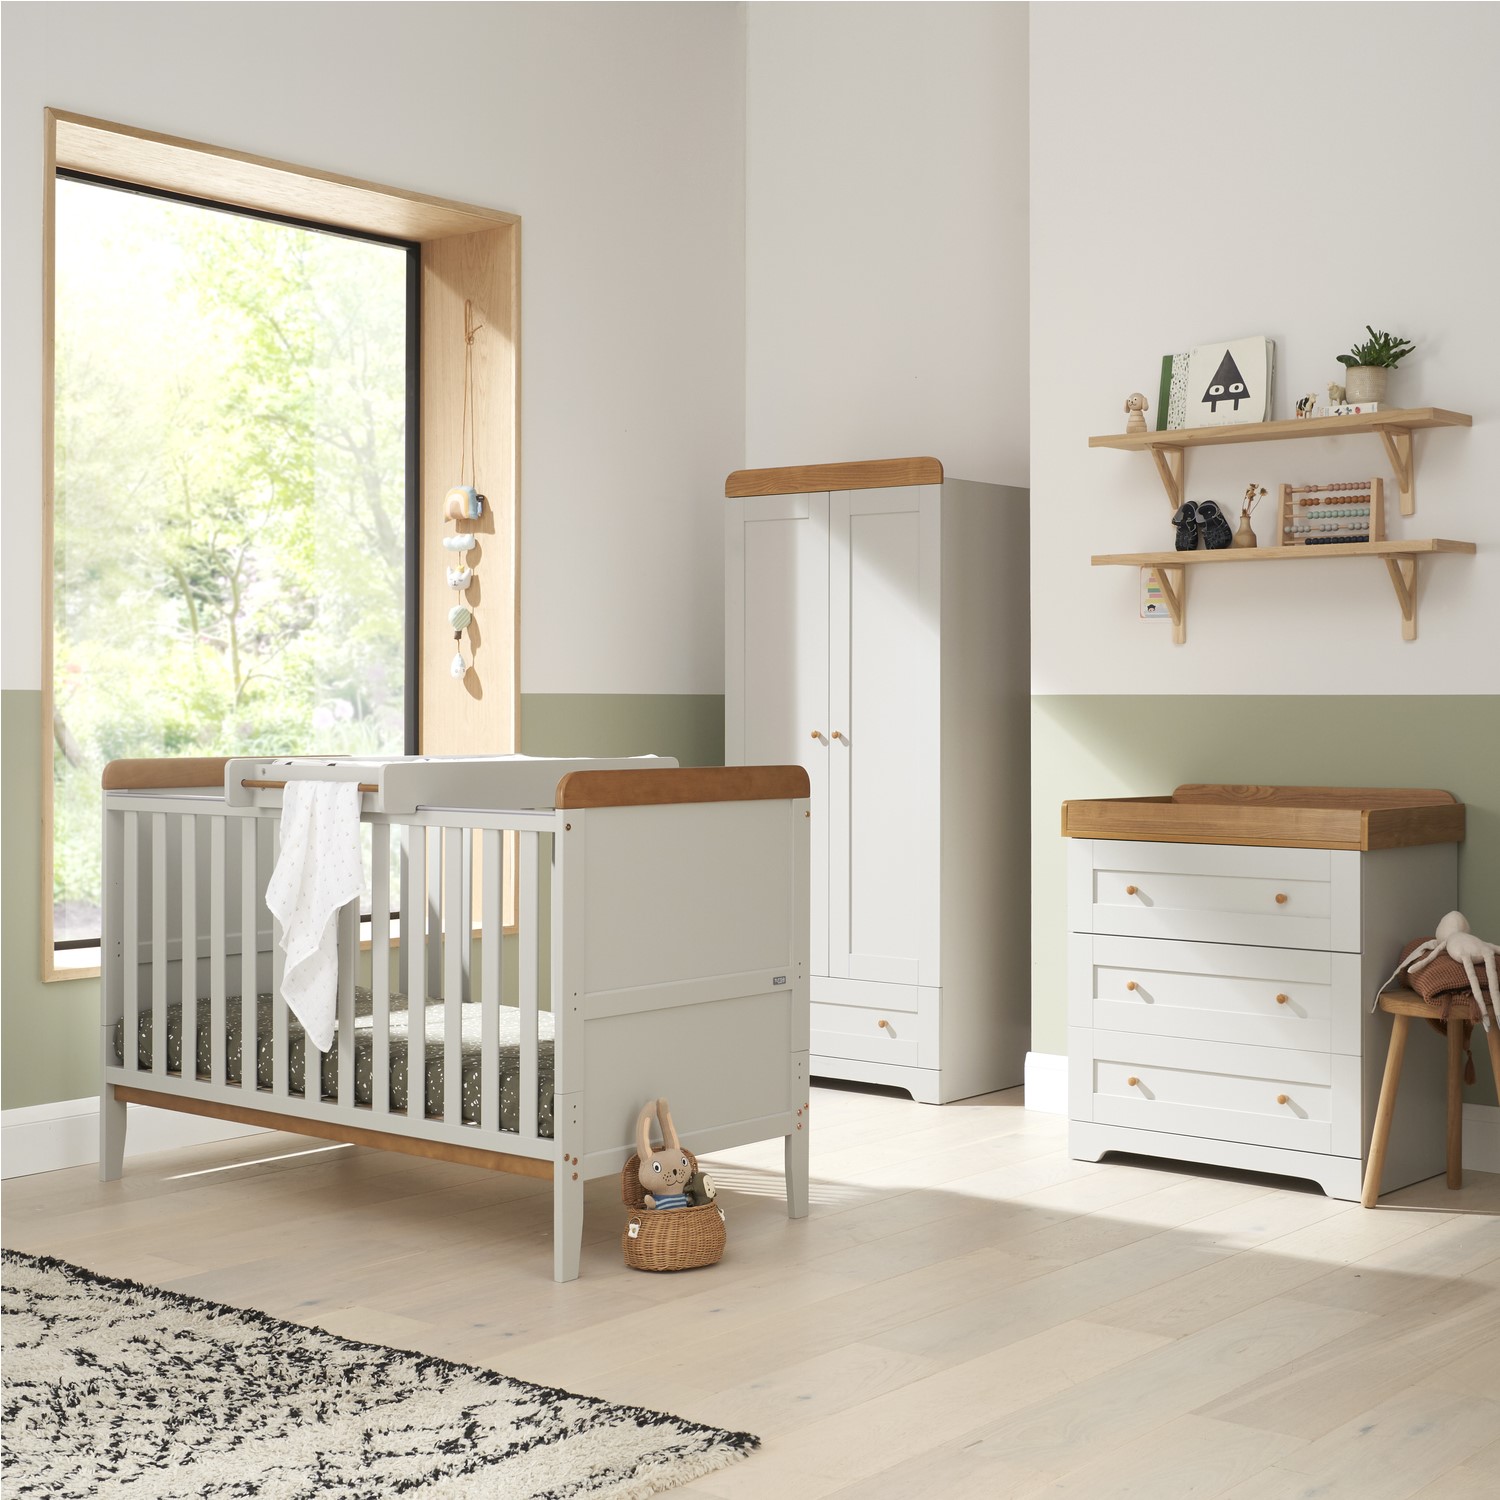 Photo of 3 piece nursery furniture set in grey and oak - rio - tutti bambini